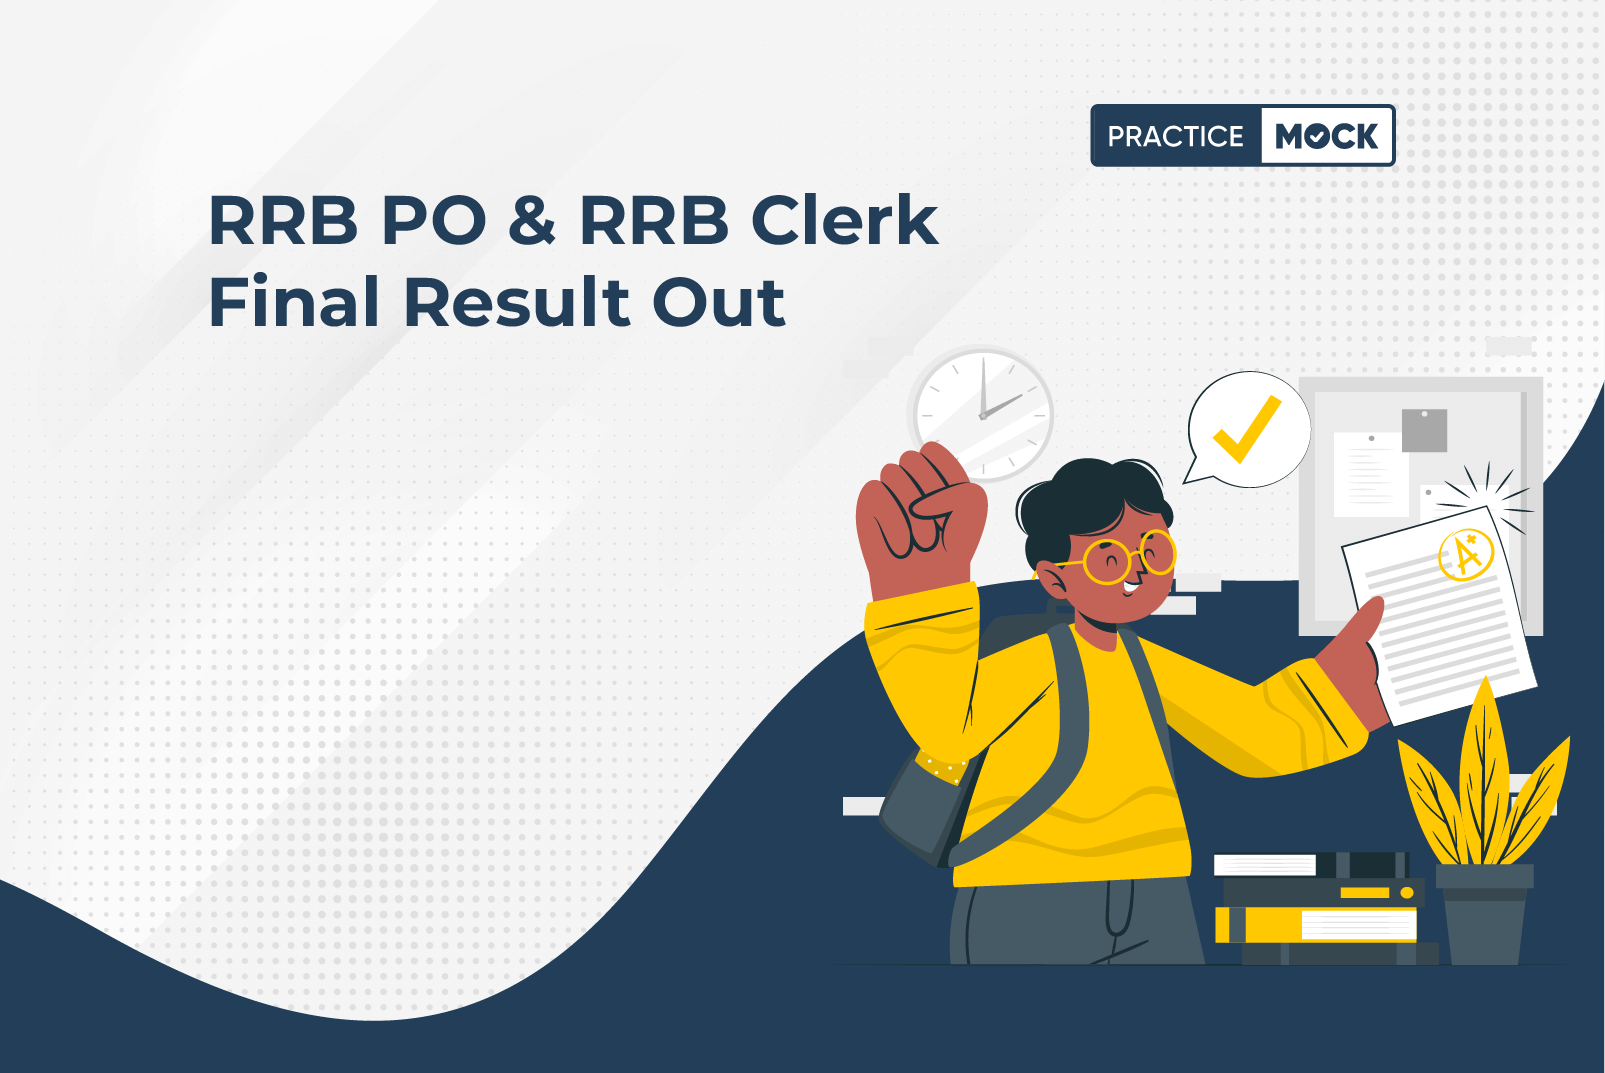 RRB PO & RRB Clerk Final Result Out